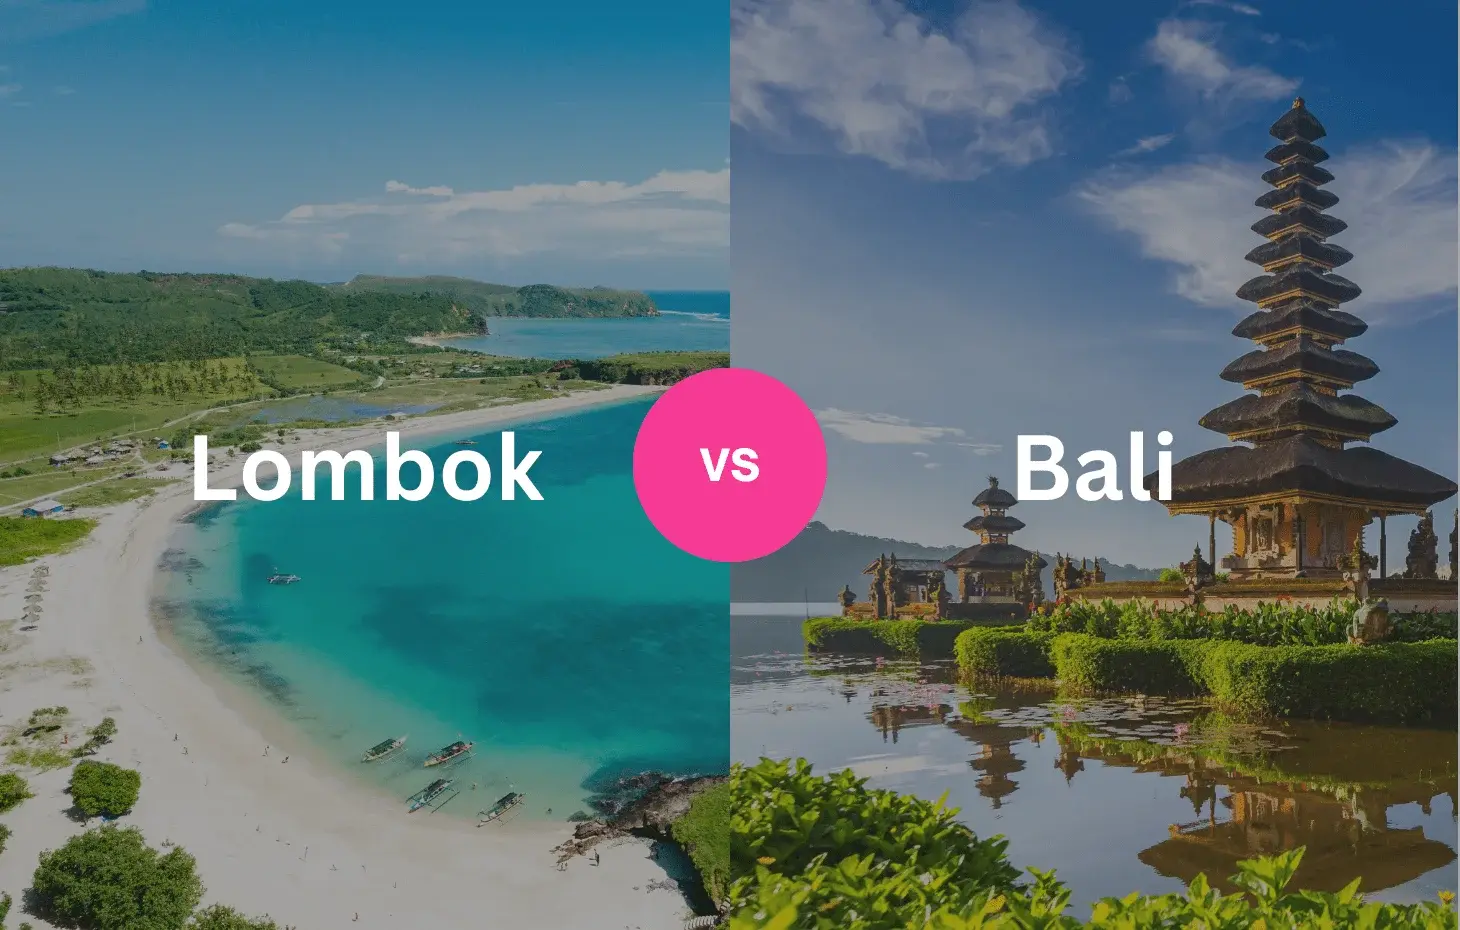 Bali versus Lombok